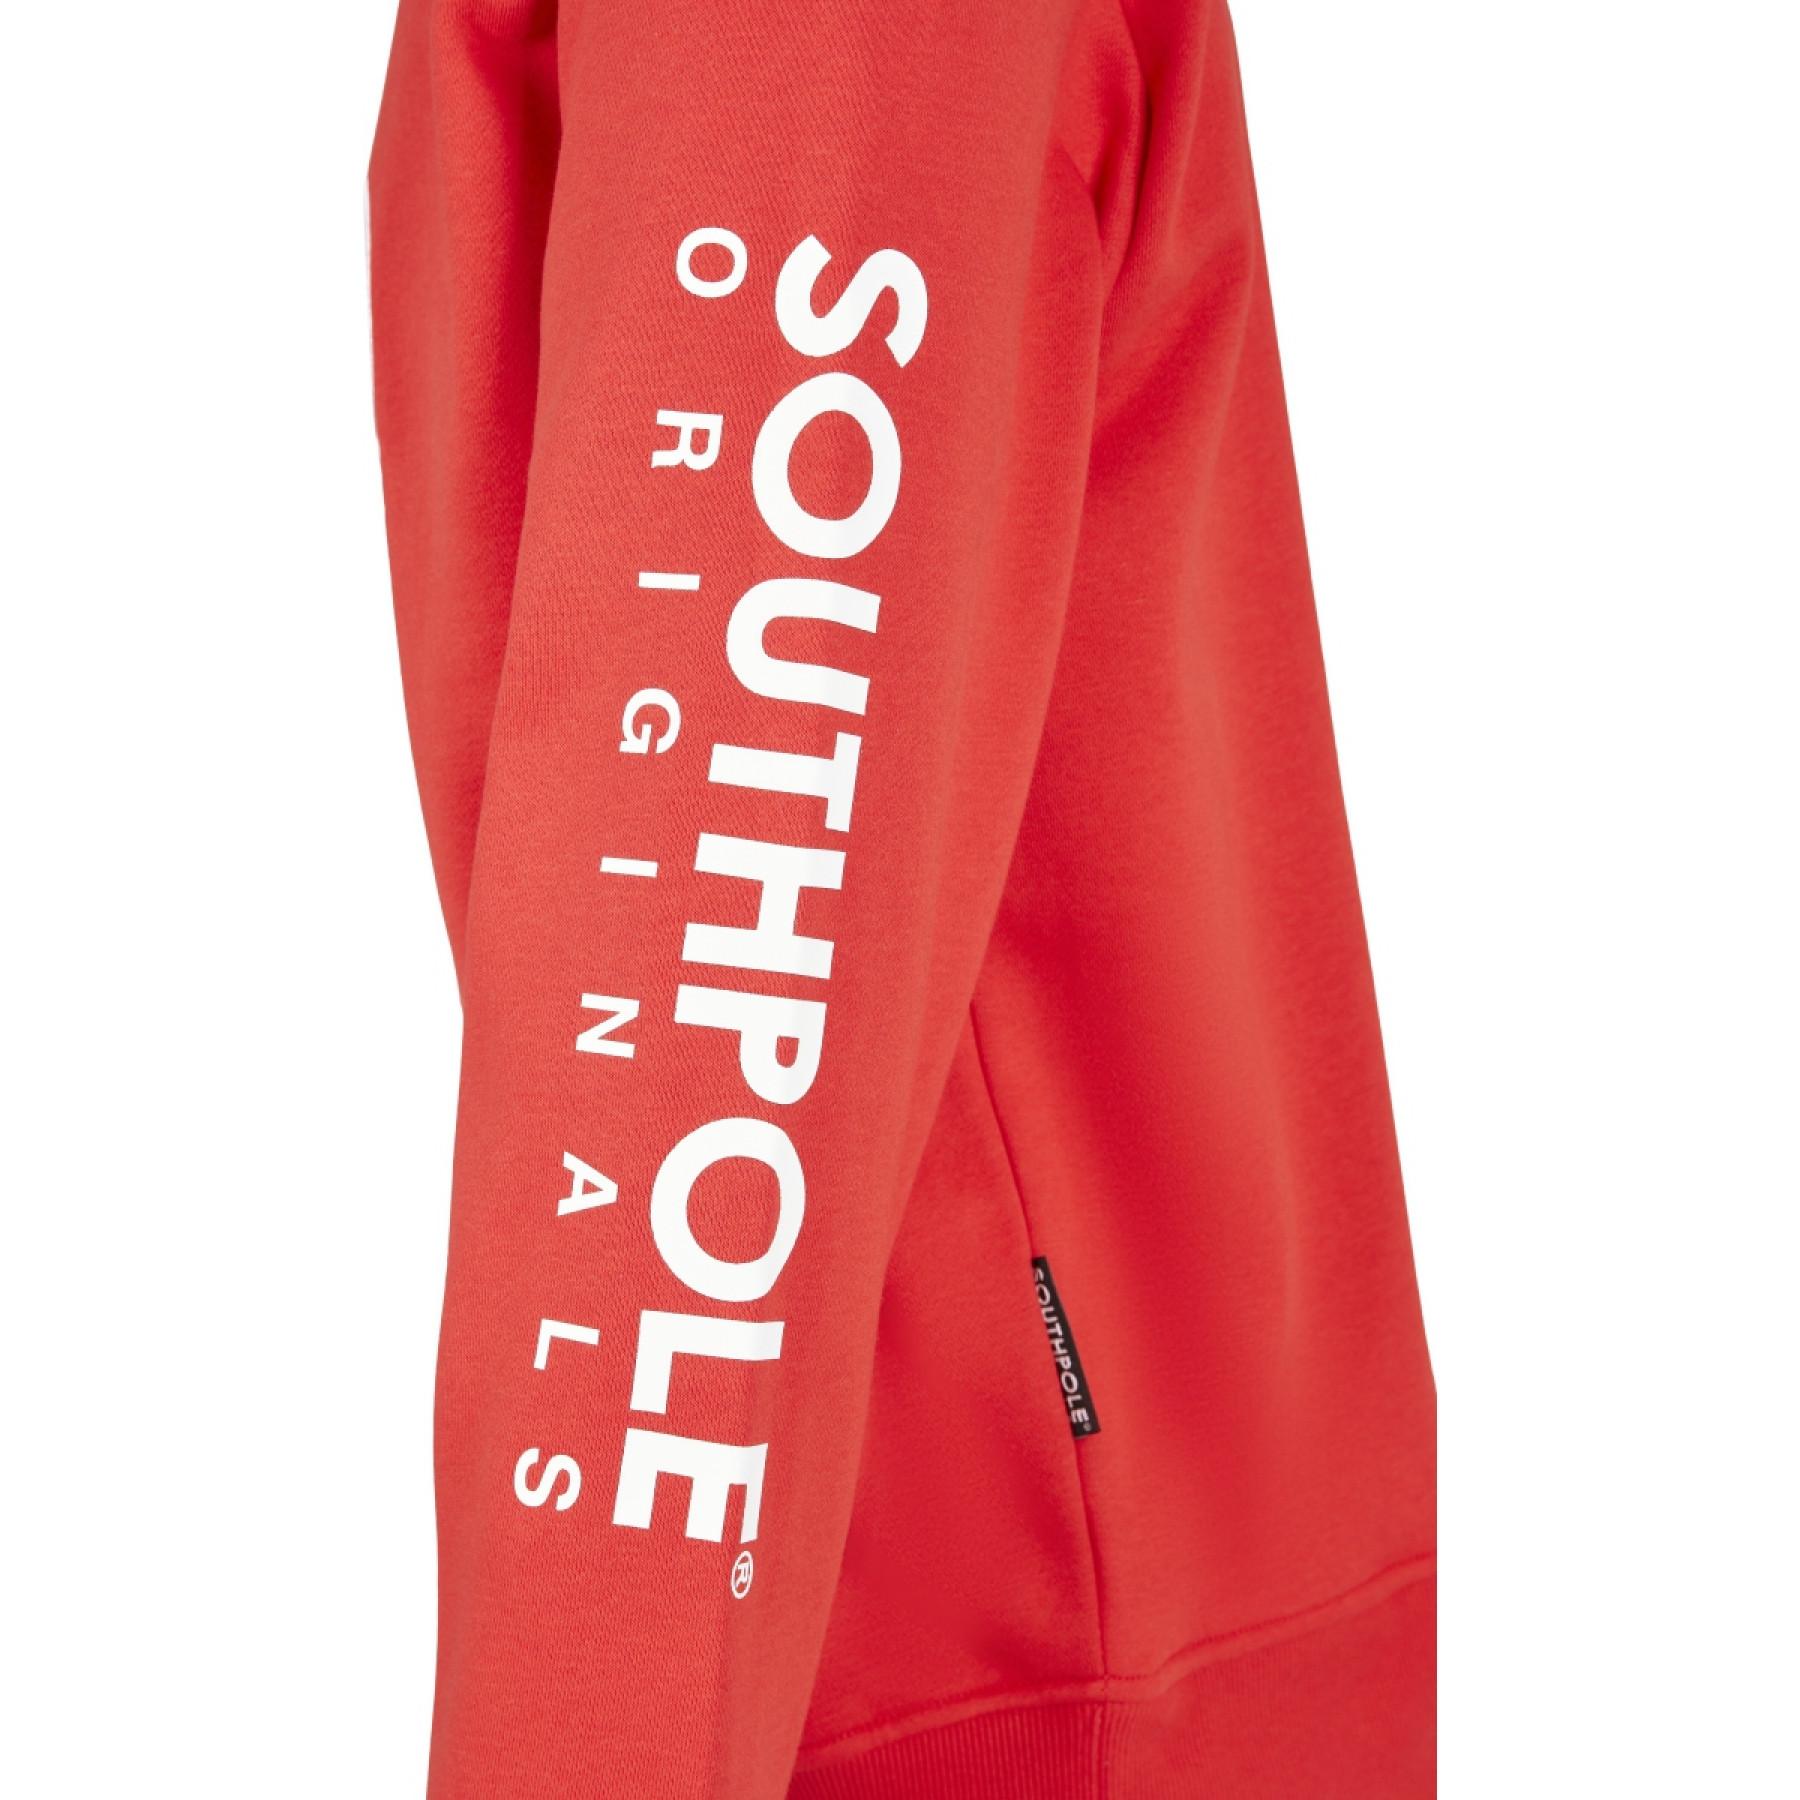 Sweatshirt Southpole 3d col rond